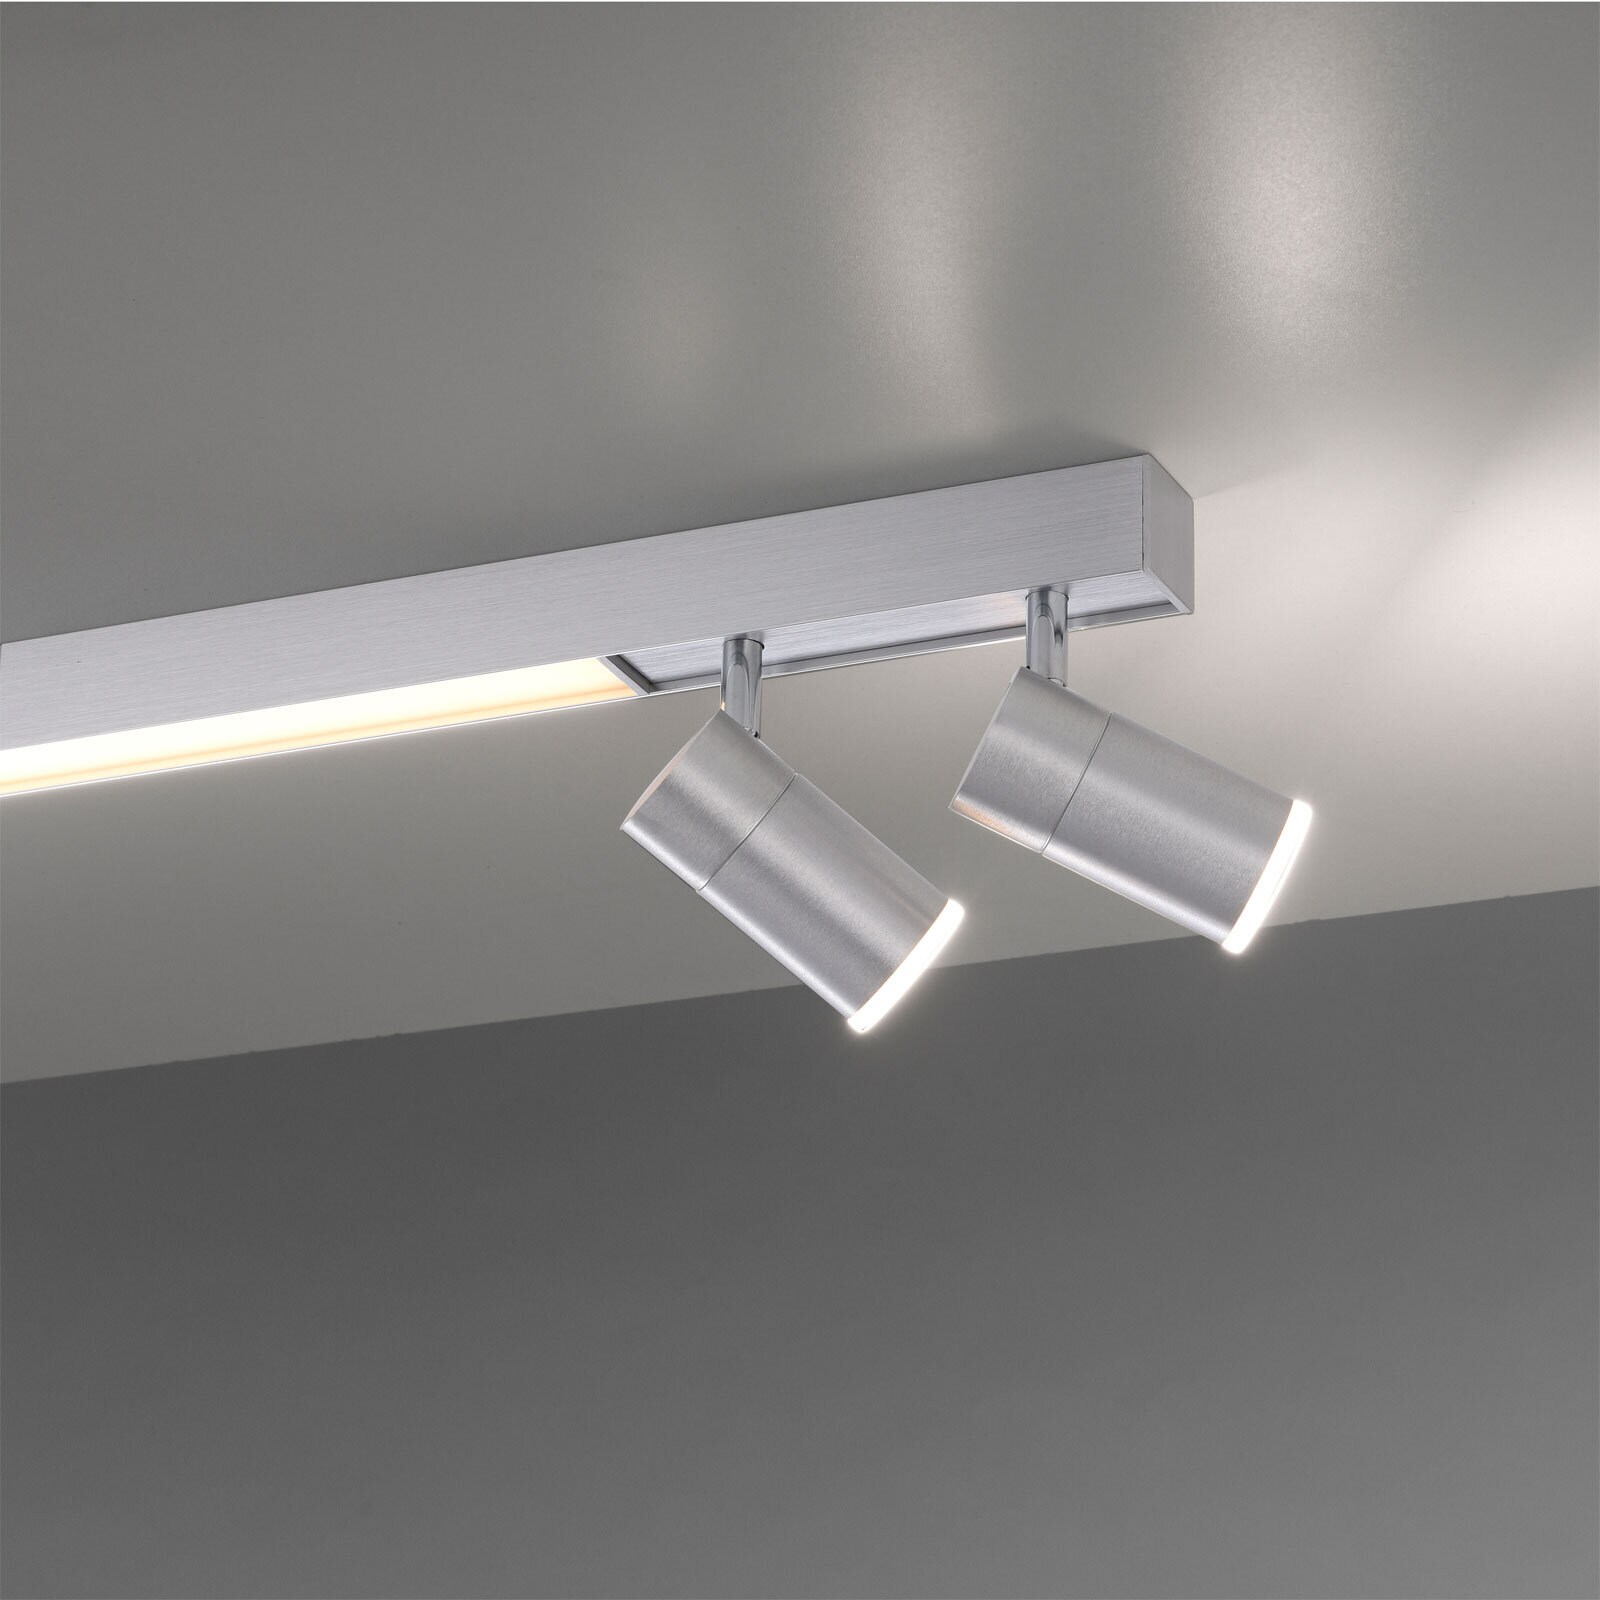 Paul Neuhaus LED Deckenlampe mit 4 Spots PURE-LINES alufarbig